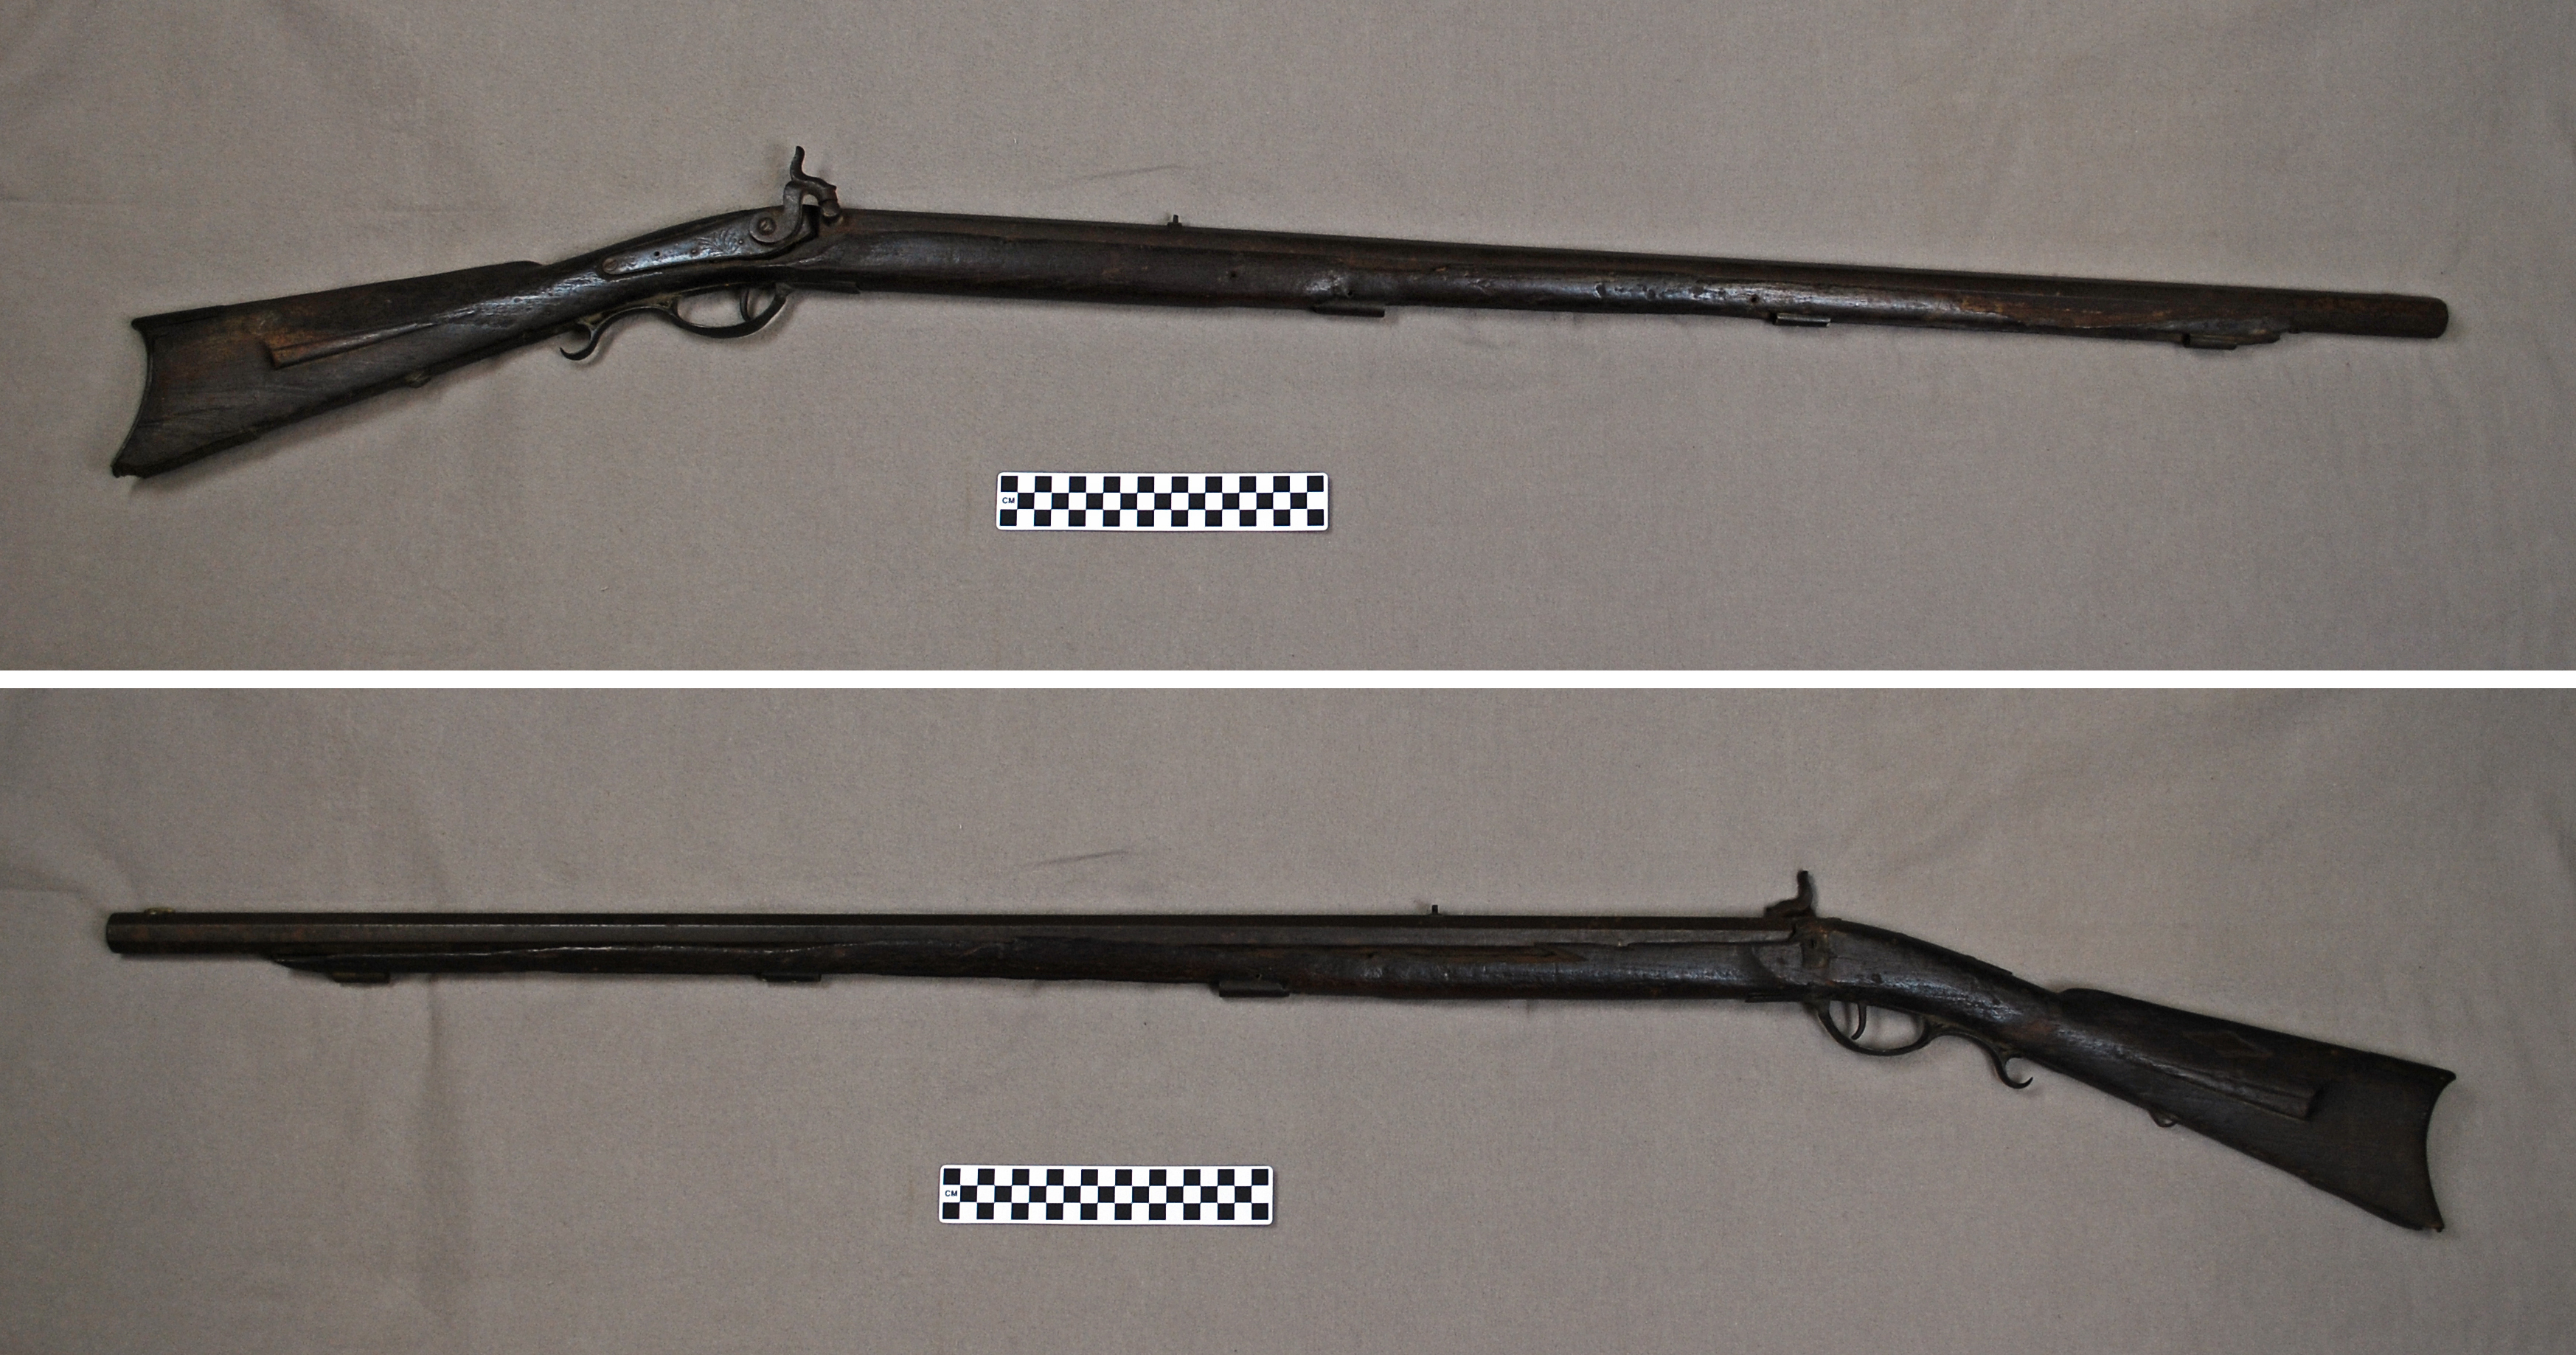 Object: Rifle (percussion rifle)